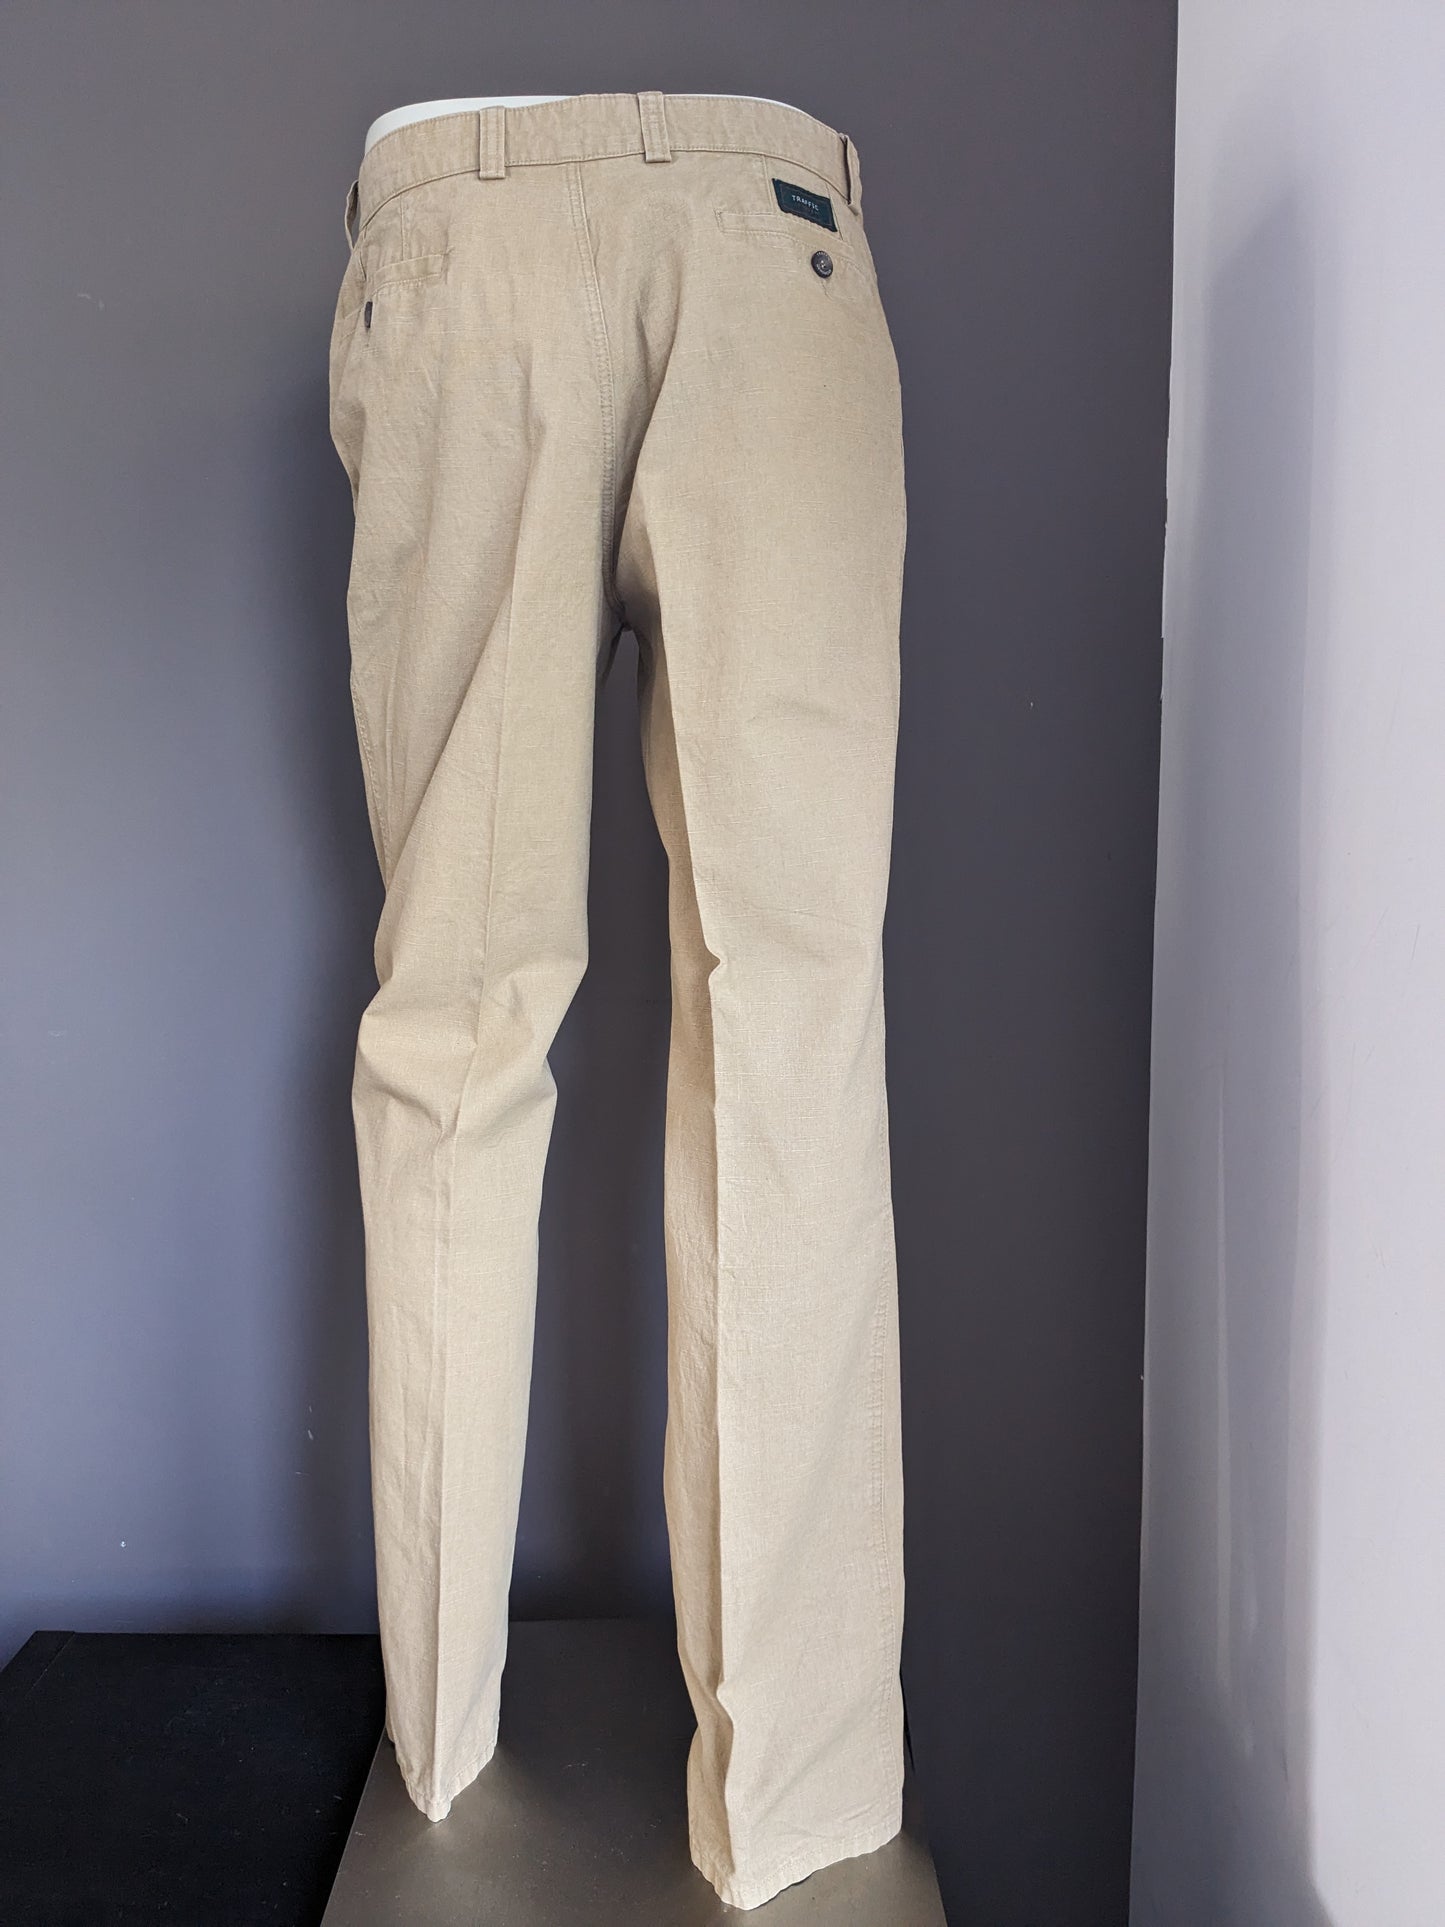 Pantalones / pantalones de moda masculina Traffic. Motivo beige. Talla 51 / M-L.